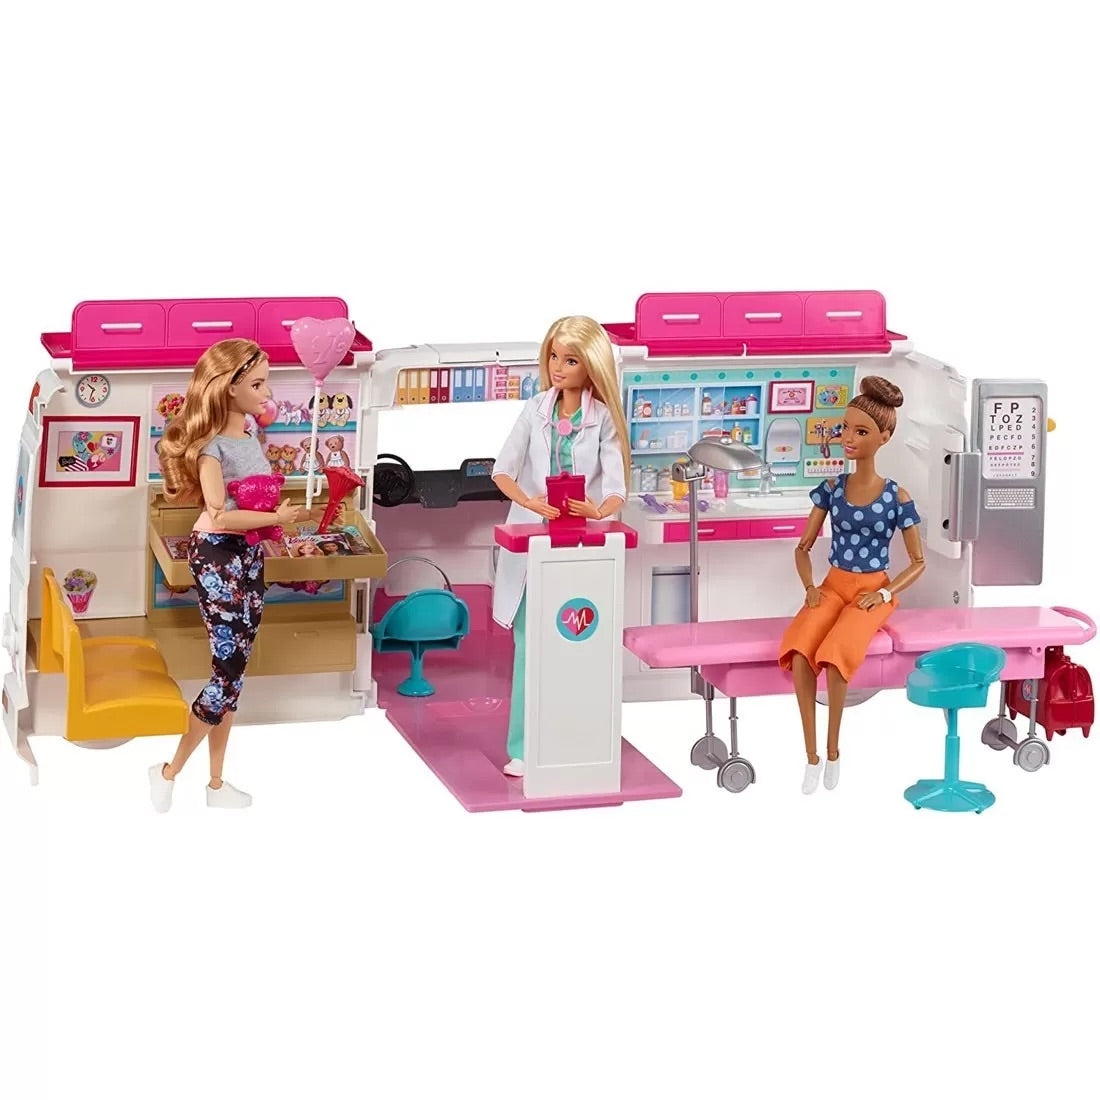 Barbie - Care Clinic - Ambulance